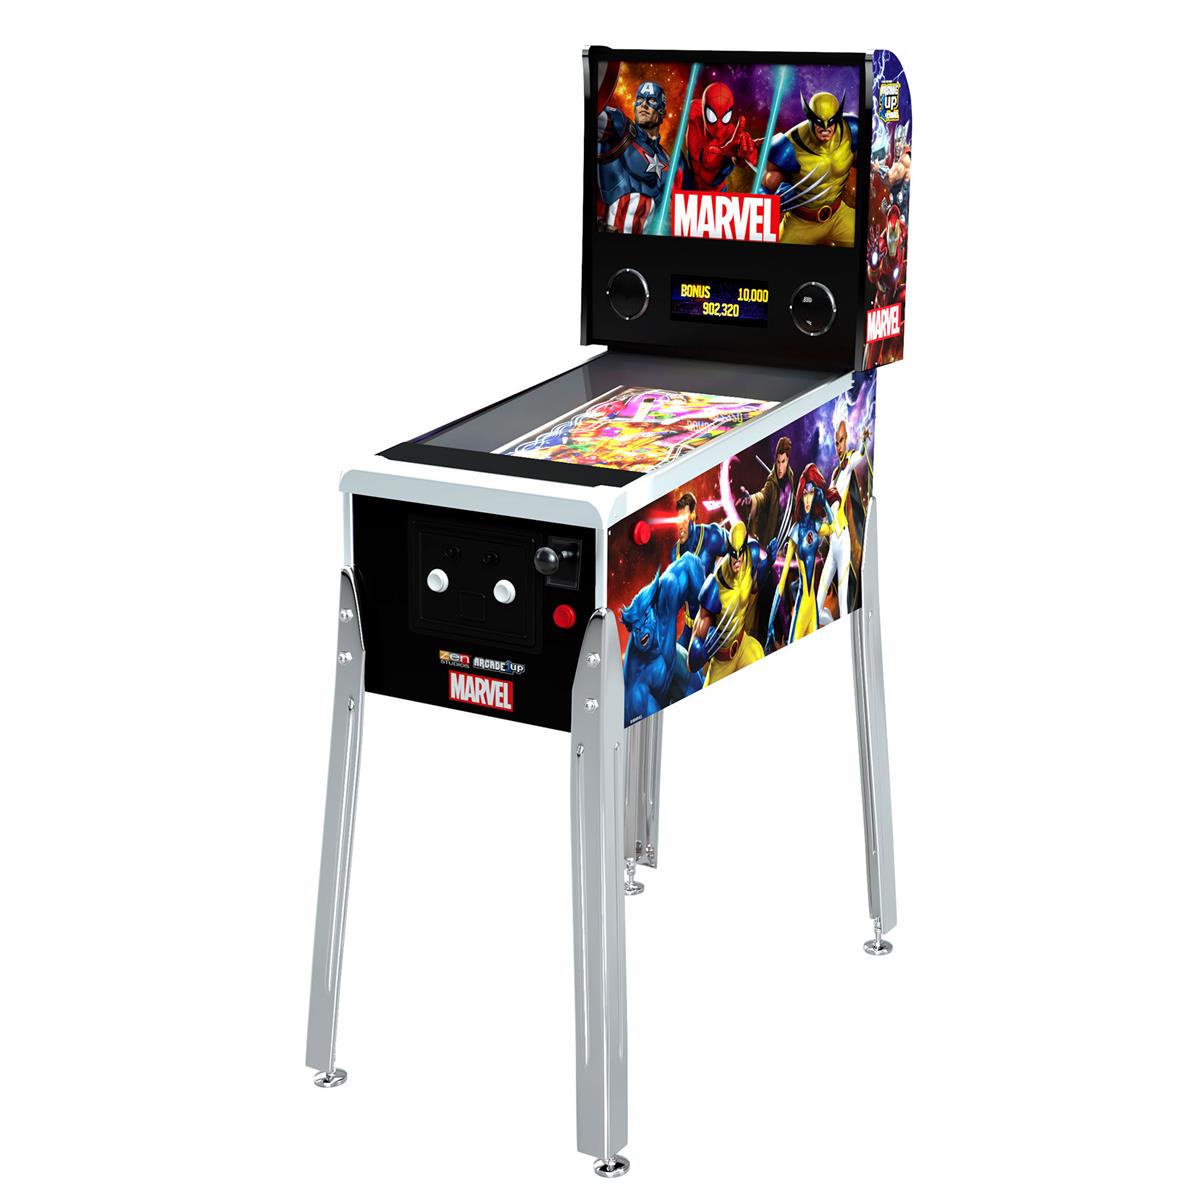 Image of Tastemaker Arcade1Up Marvel Pinball Arcade Game Machine